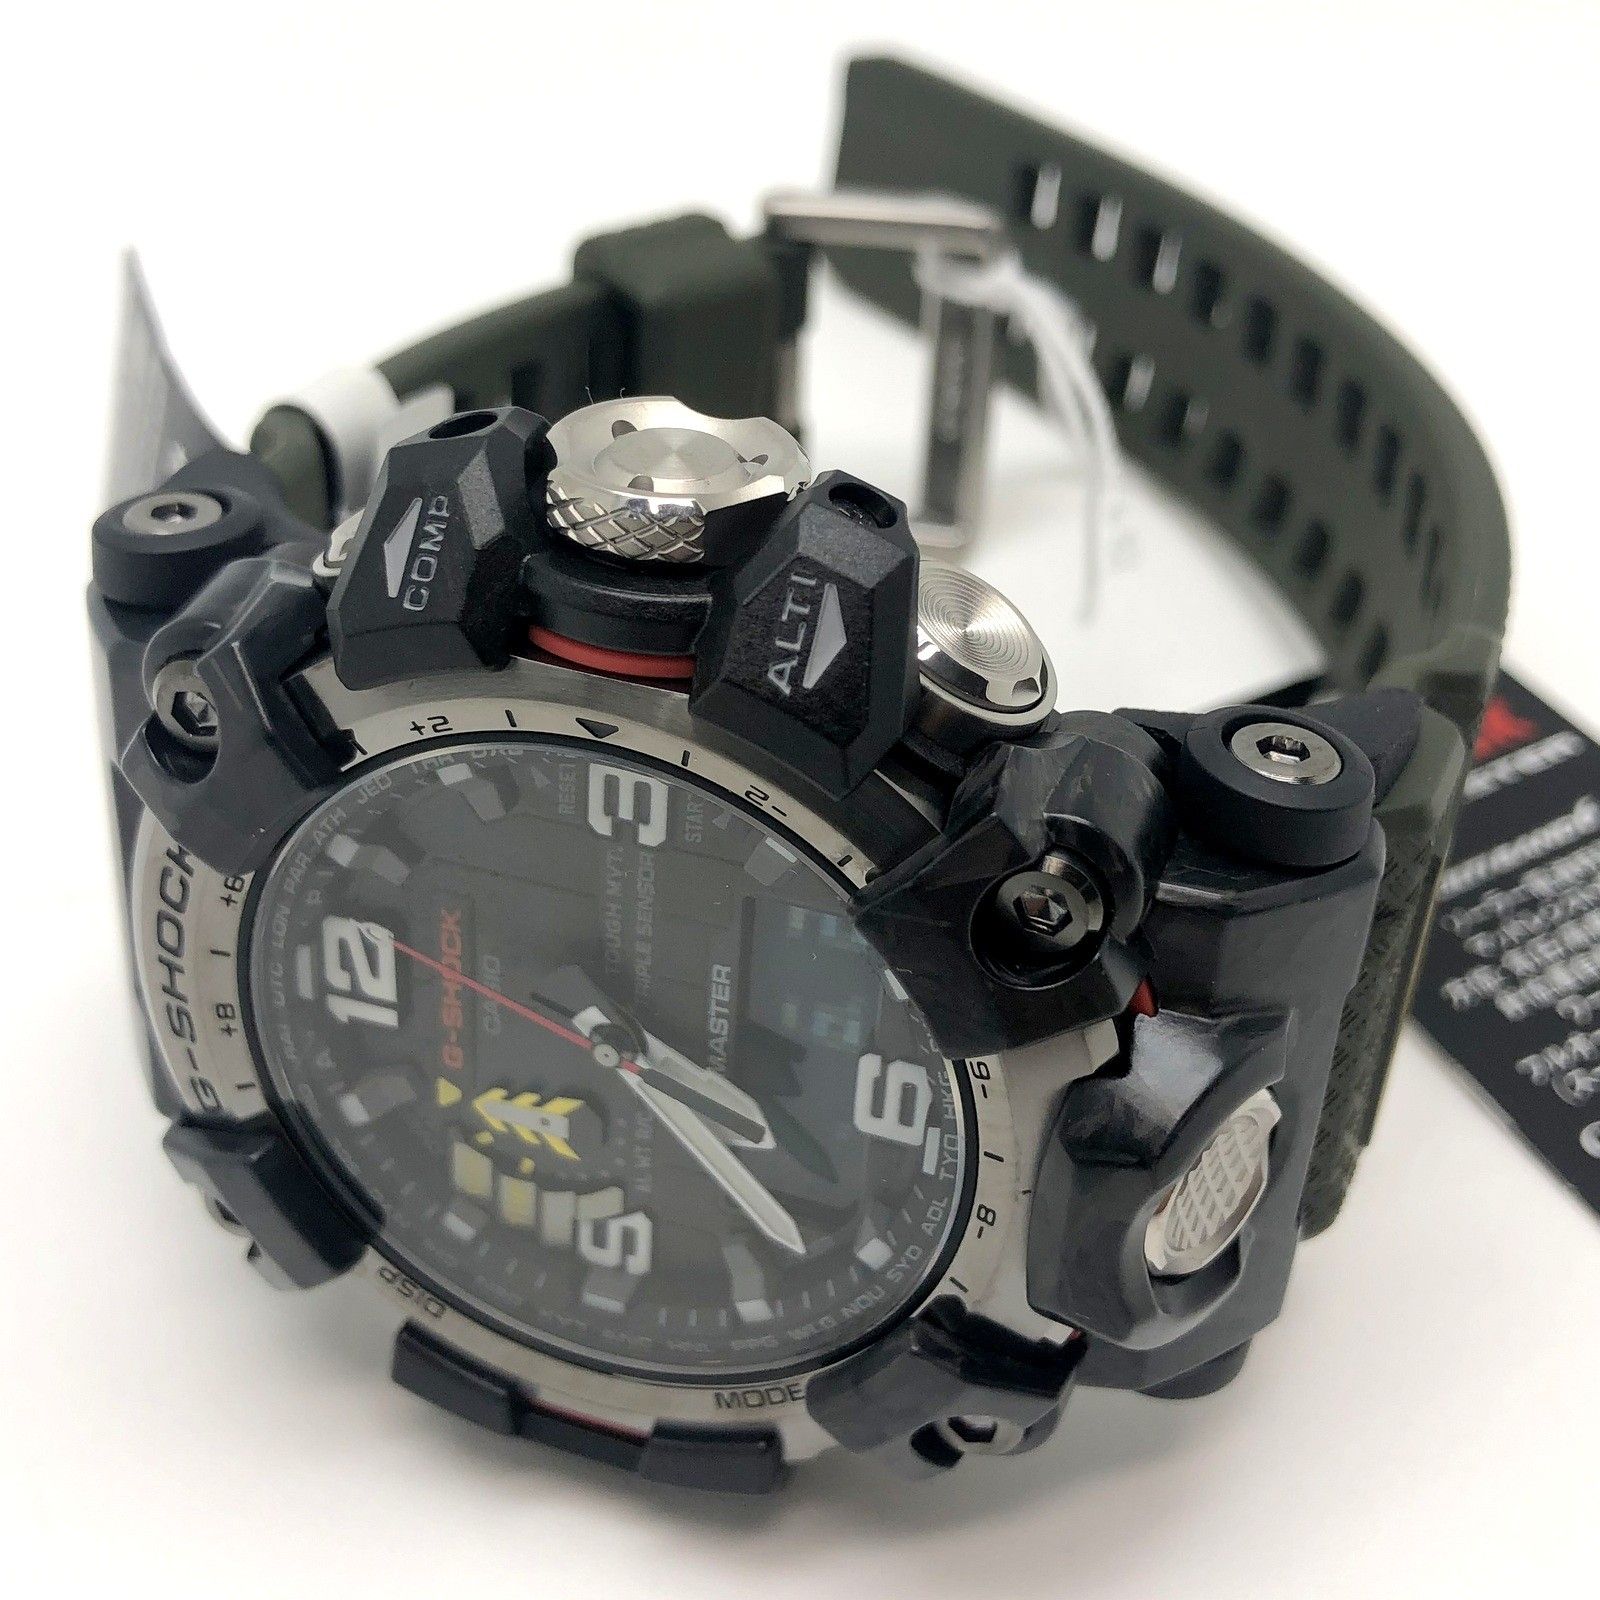 G-SHOCK ジーショック CASIO カシオ 腕時計 GWG-2000-1A3 MUDMASTER マッドマスター 電波ソーラー ブラック グリーン  - メルカリ